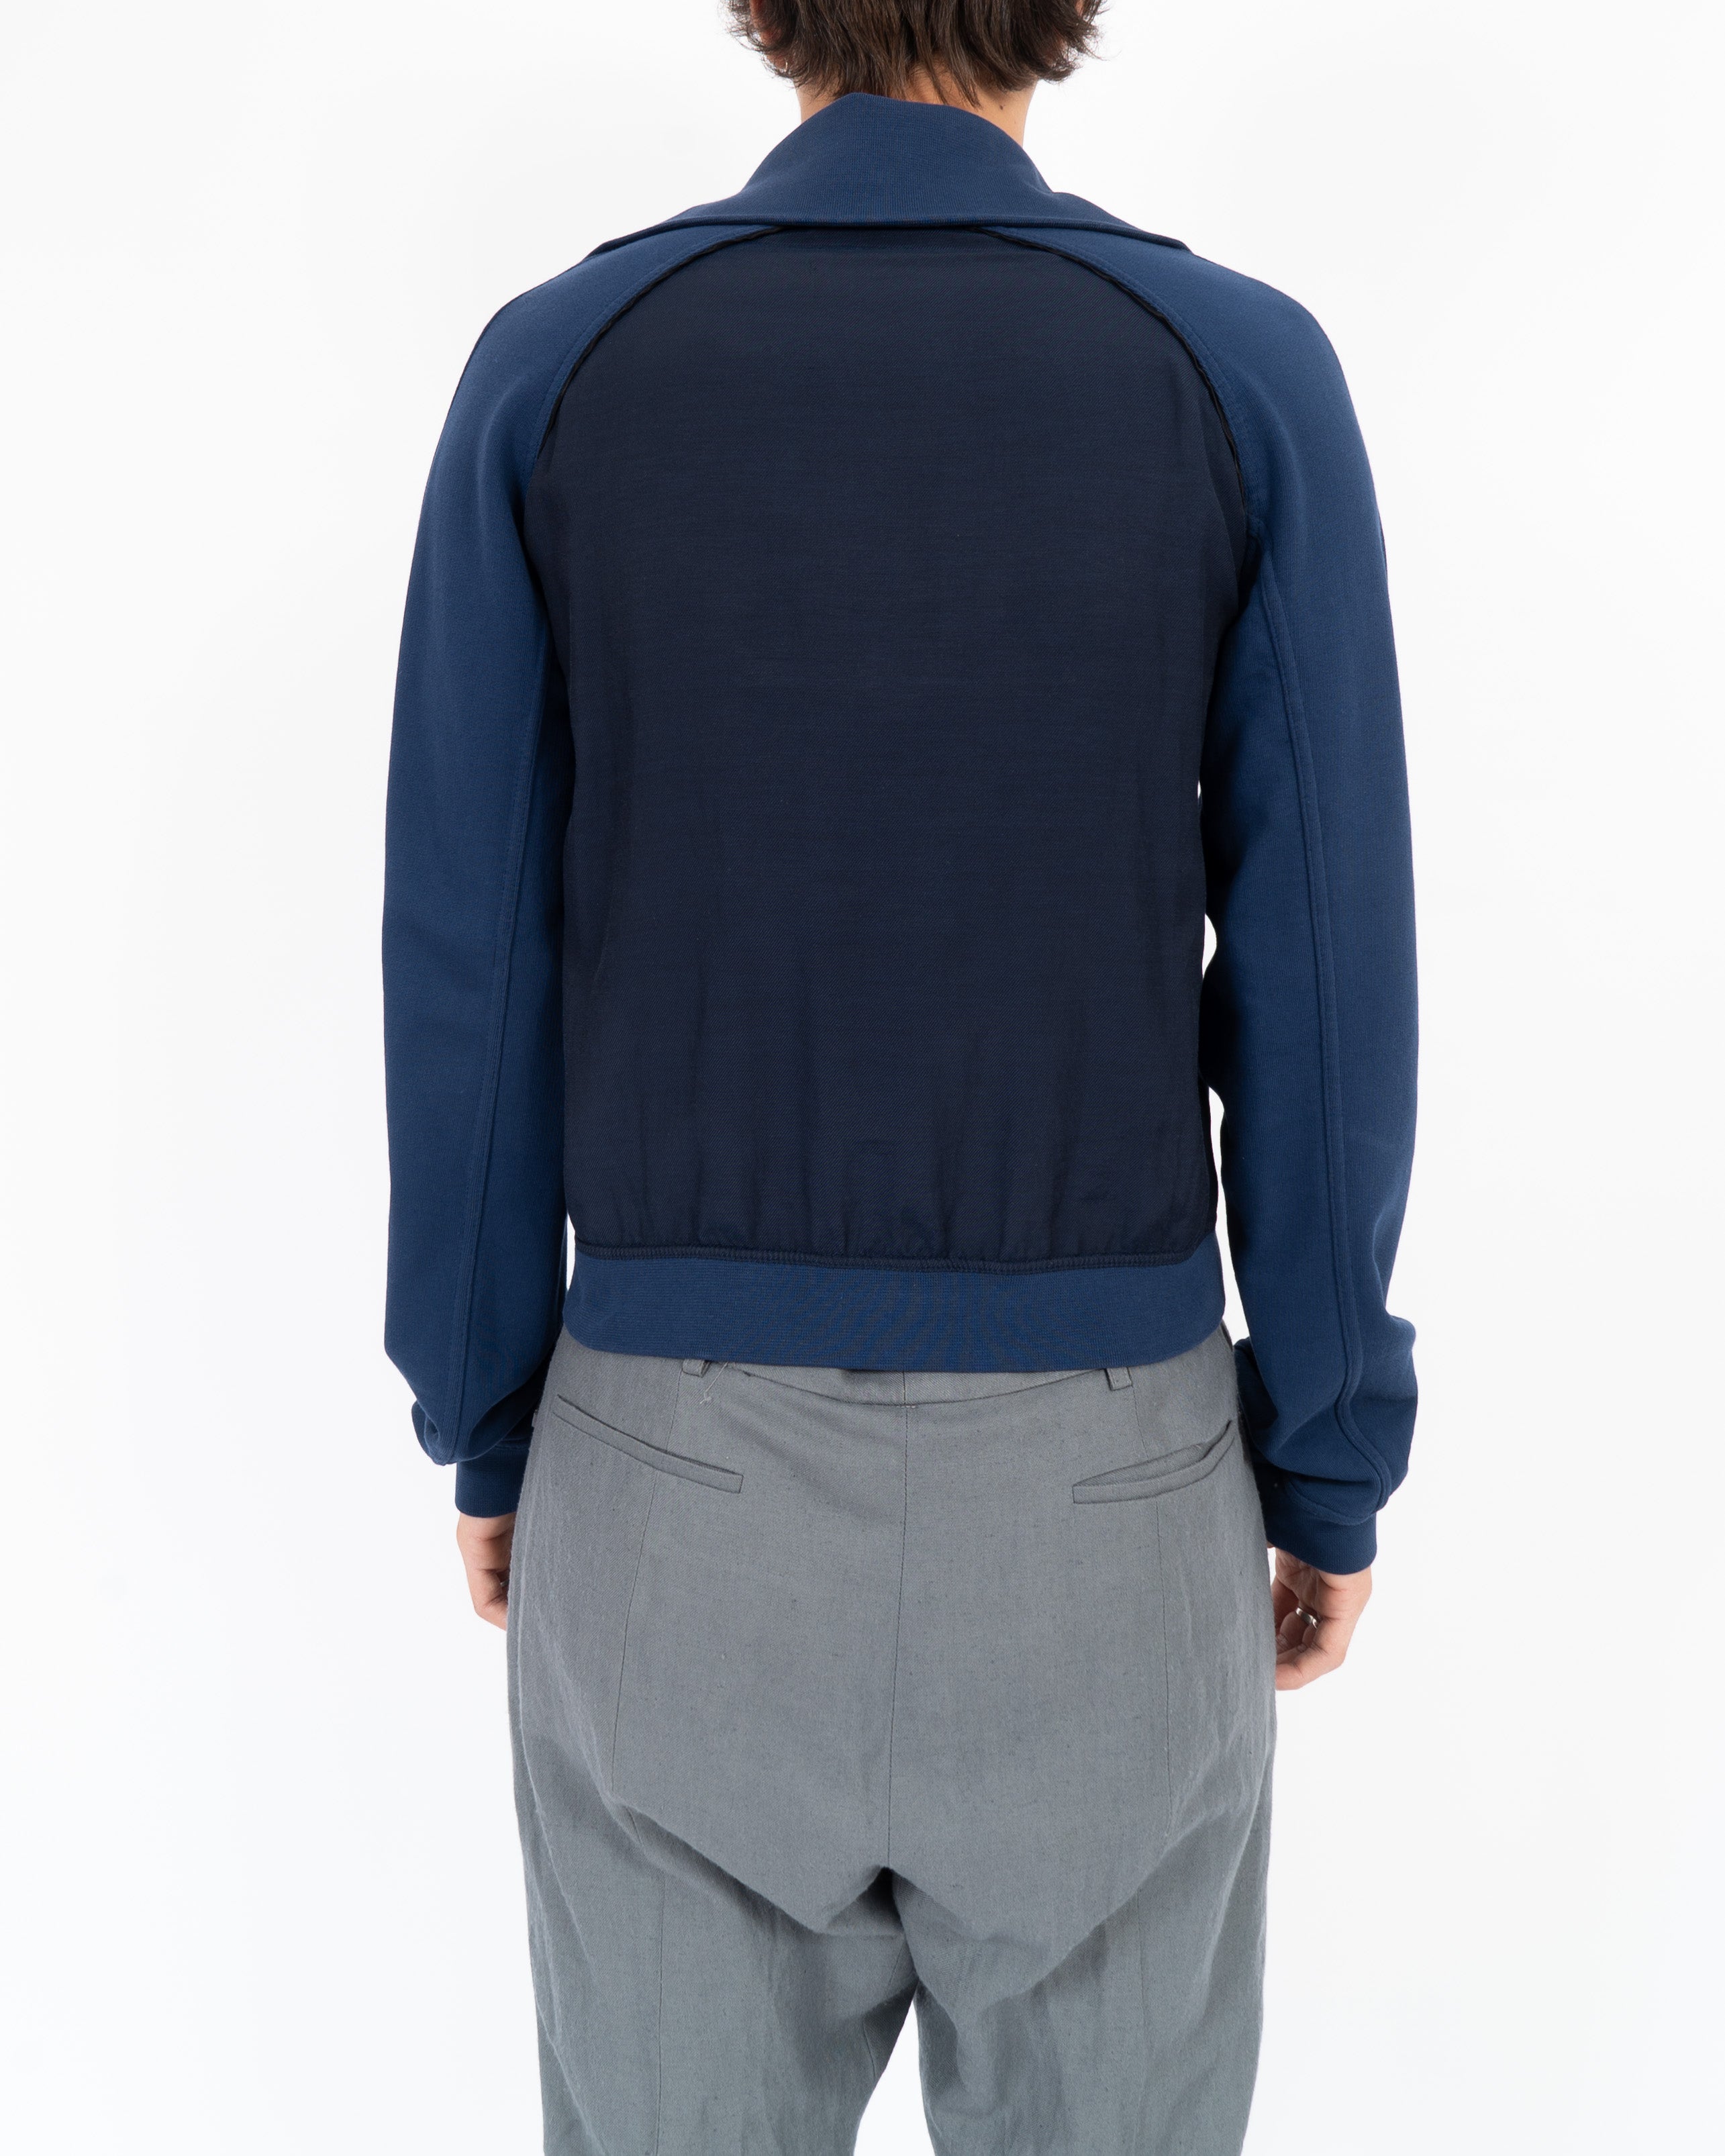 SS19 Blue Half Zip Perth Sweater